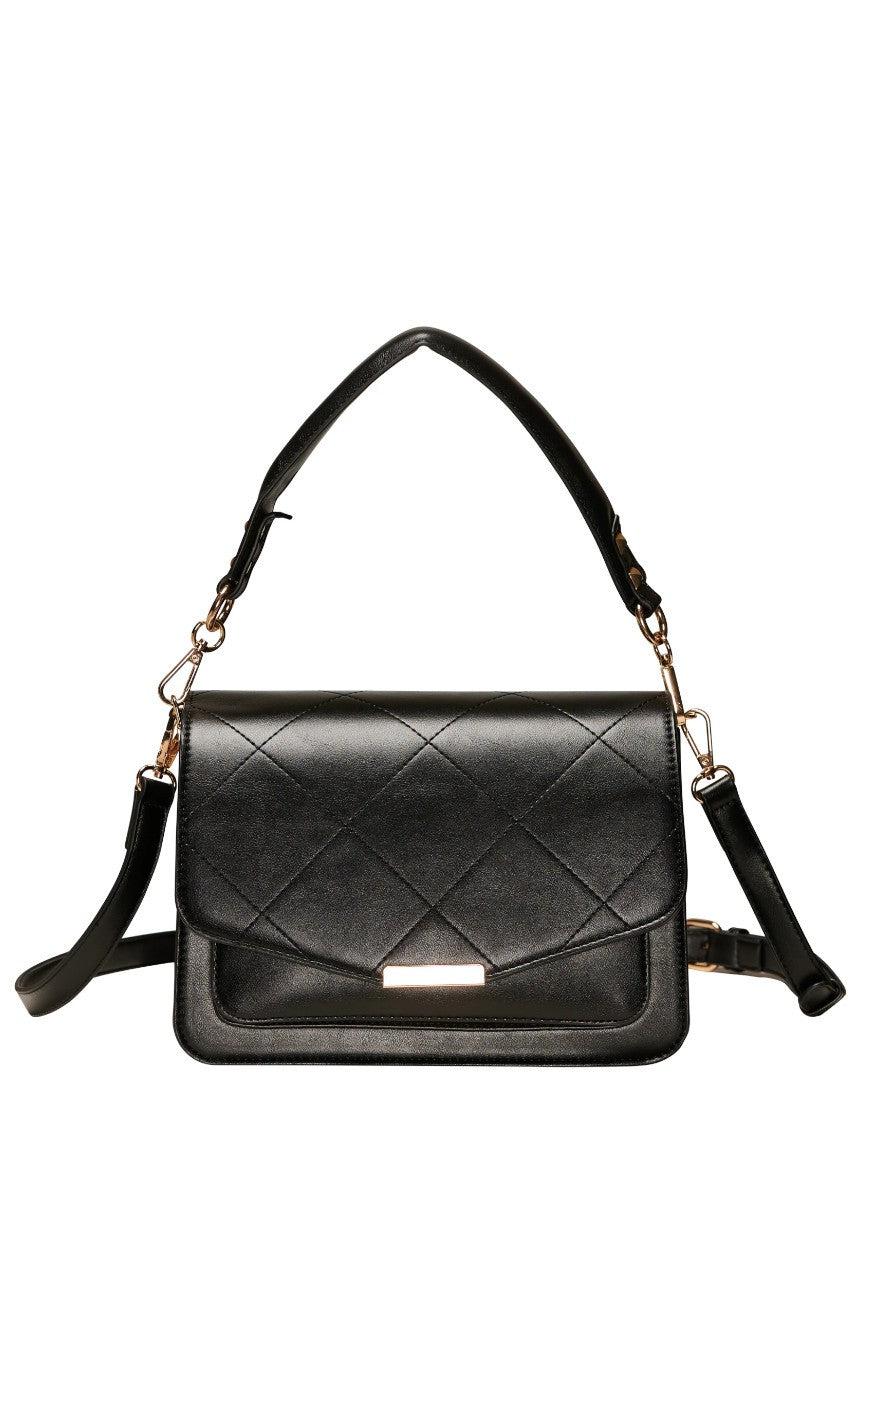 Se Noella Taske - Blanca Multi Compartment - Black Leather Look hos Fashionbystrand